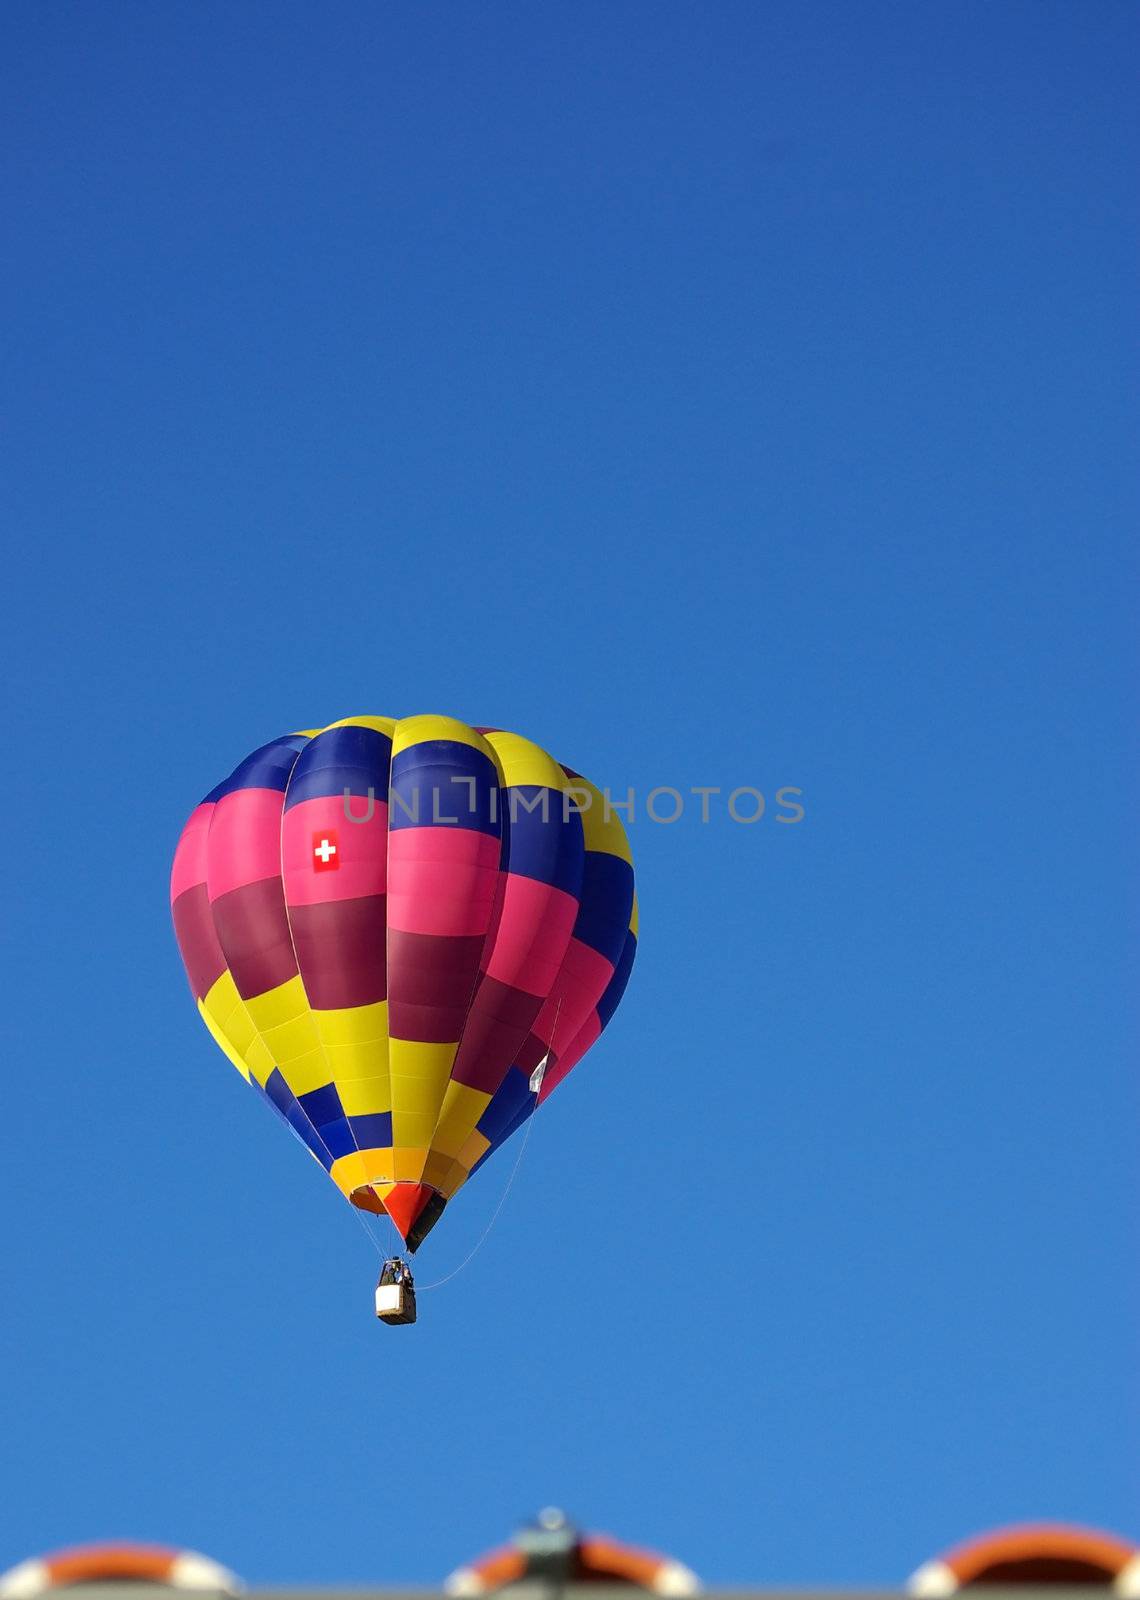 Hot air balloon in the blue sky.